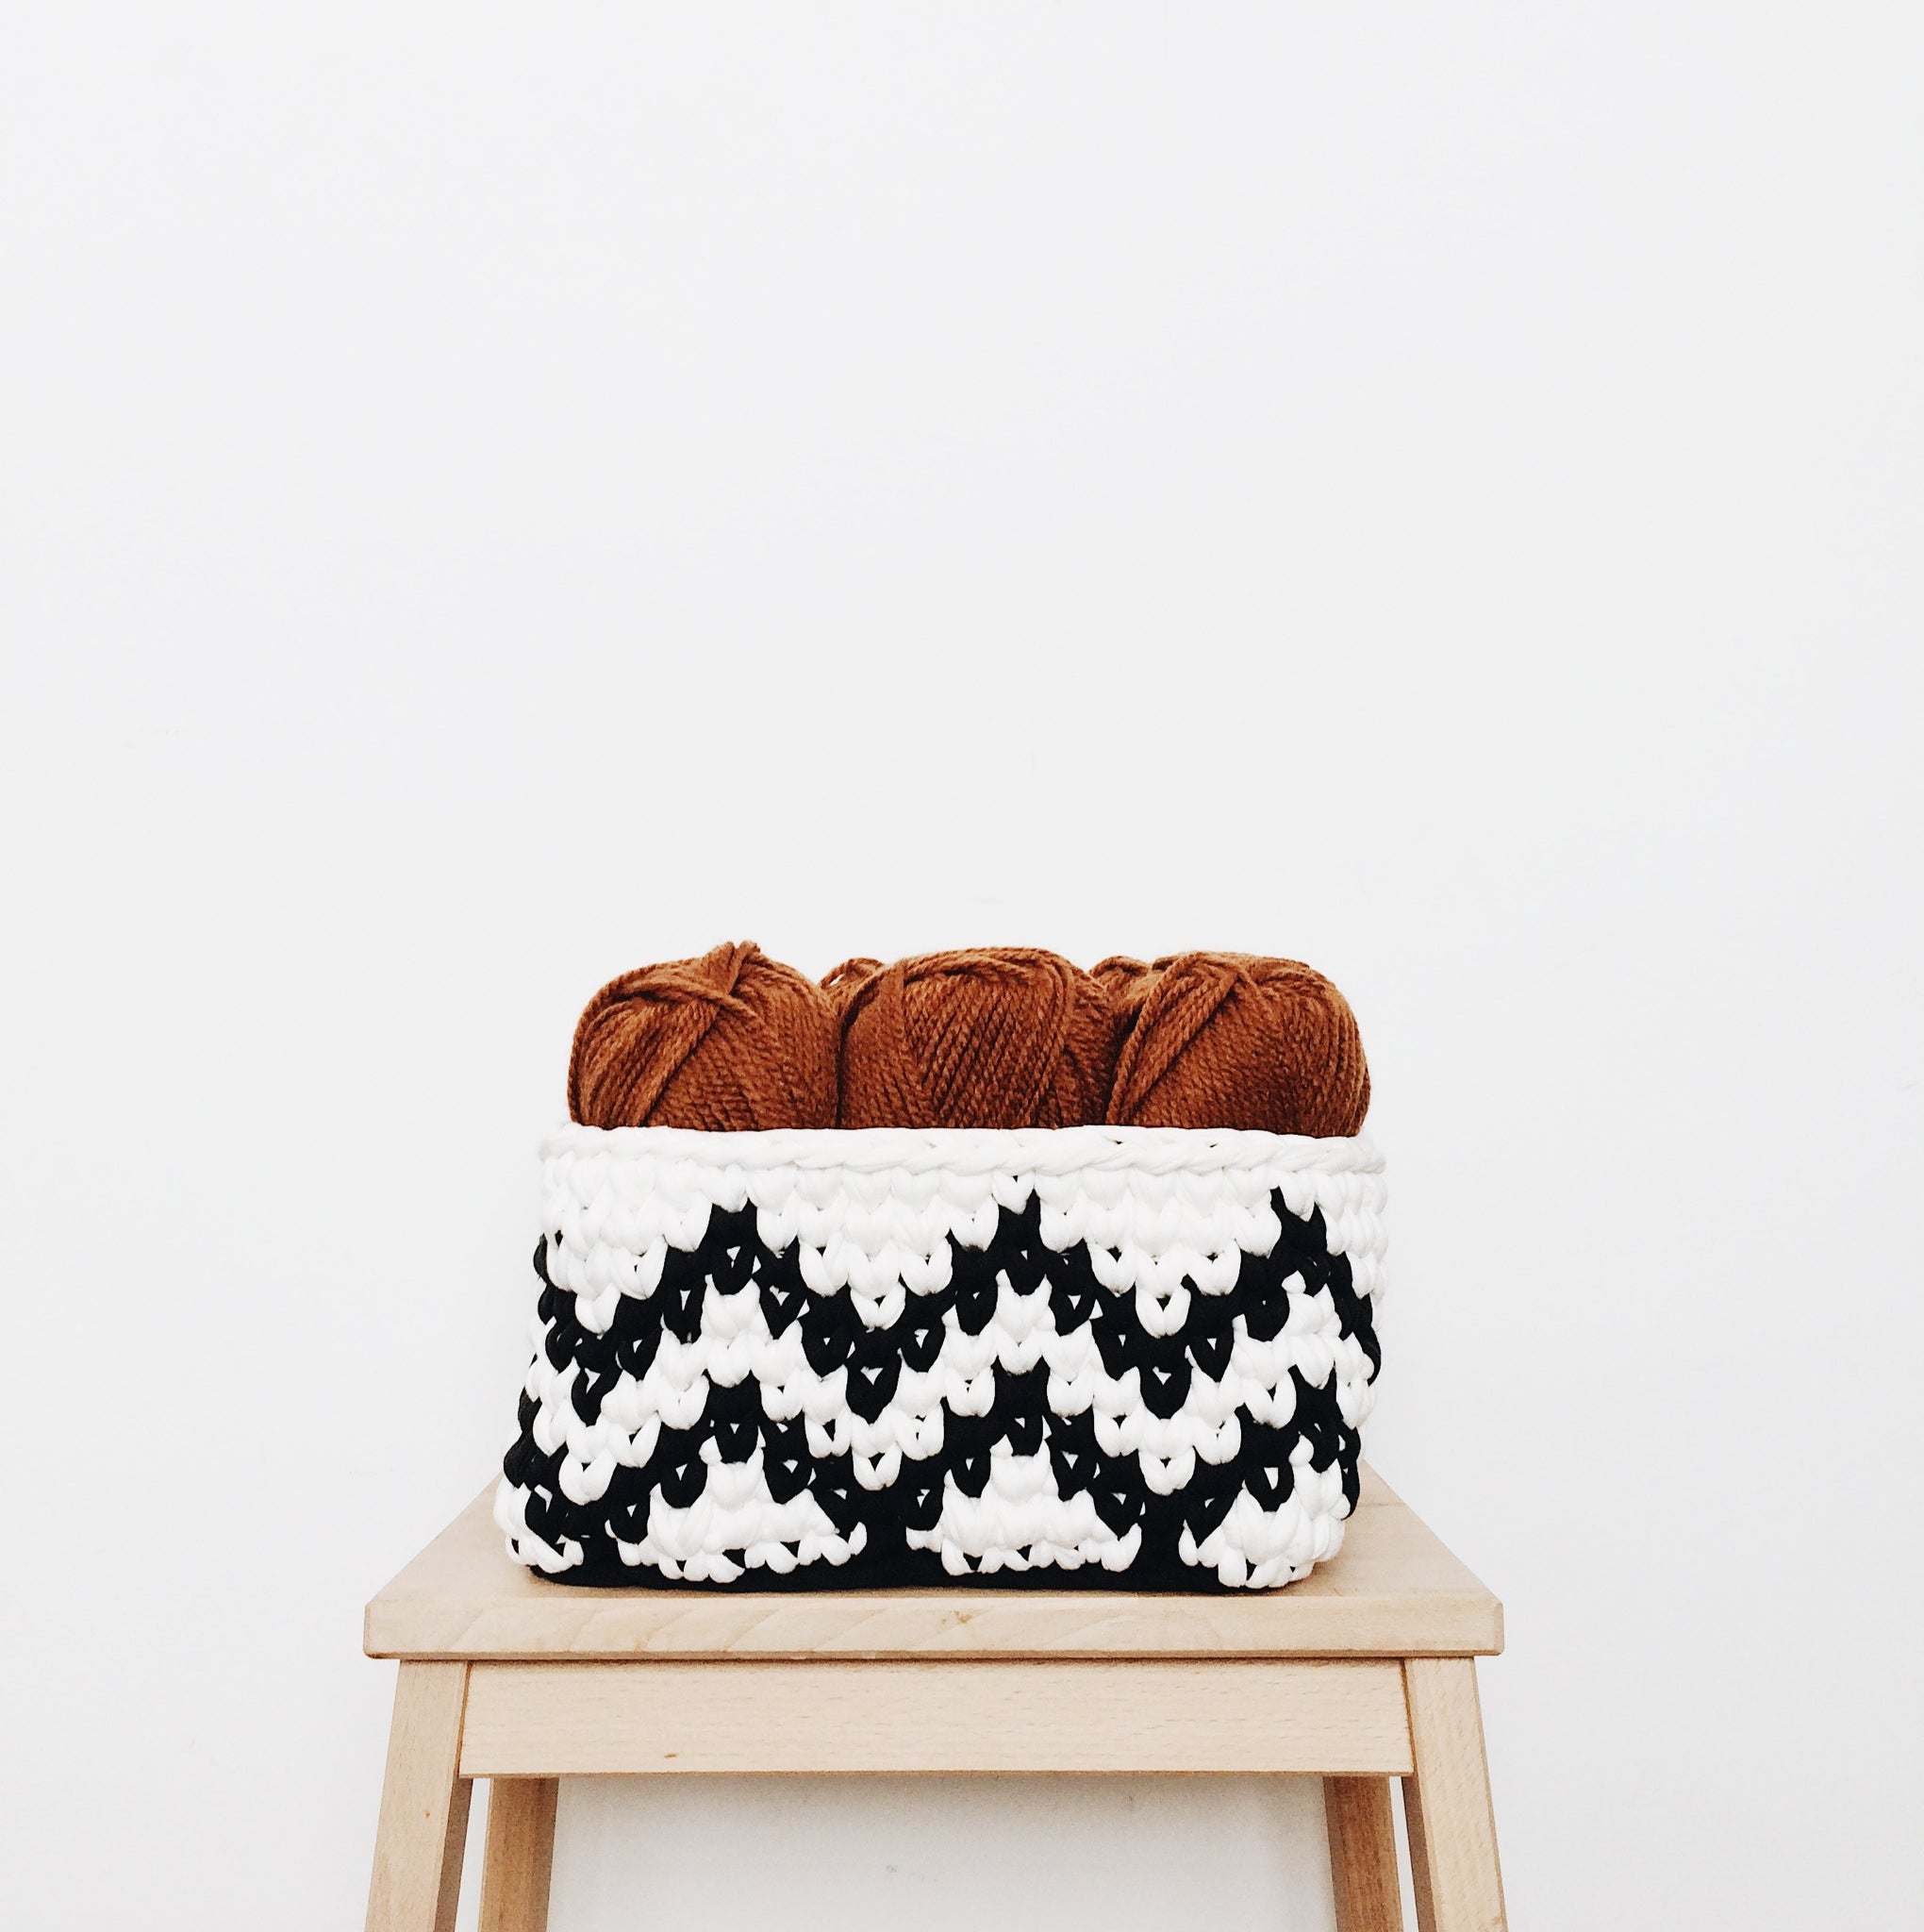 Simple Crochet Basket - Day 47